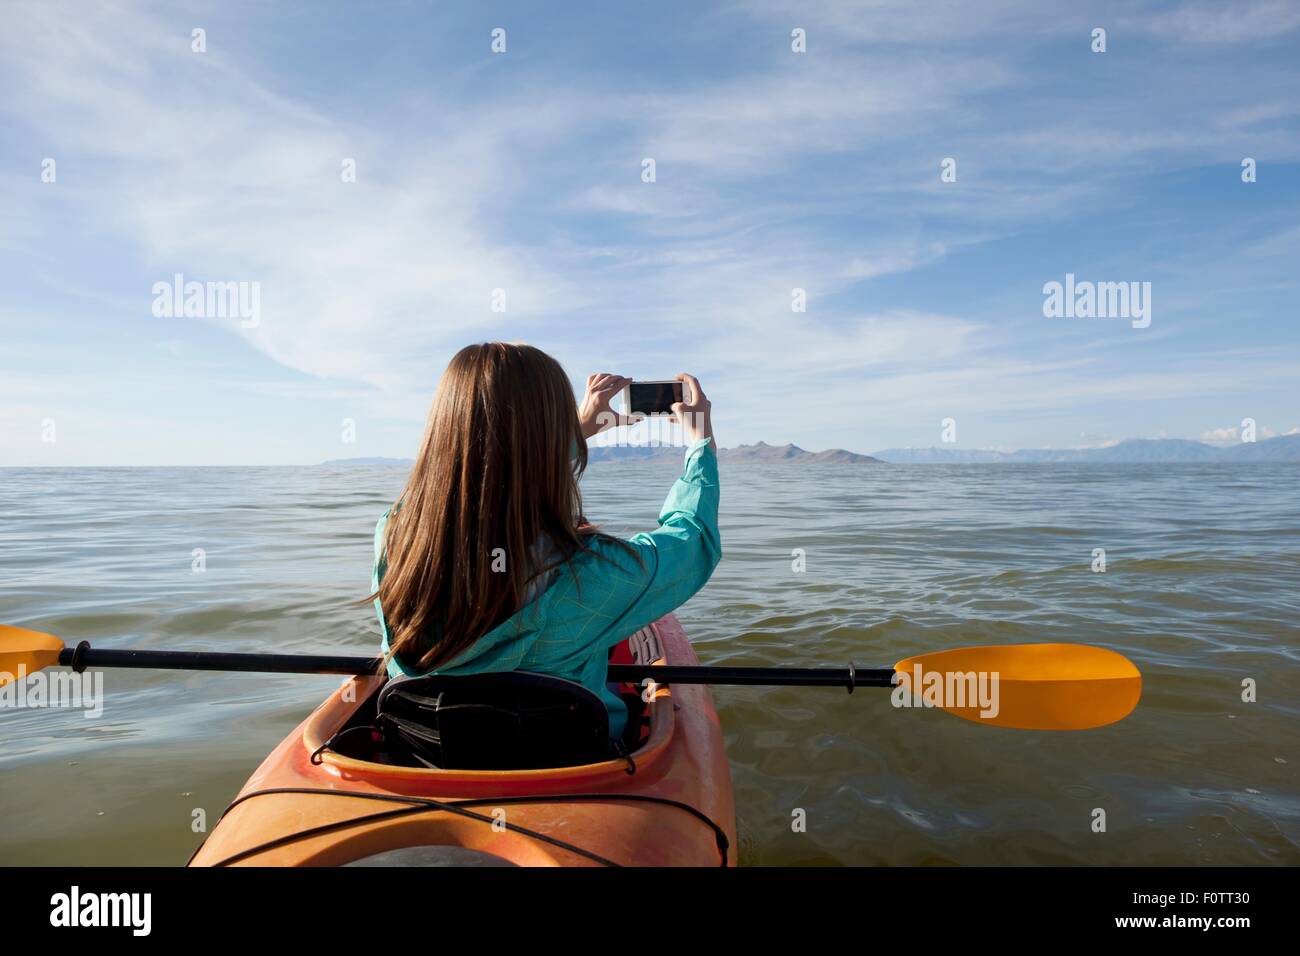 Rear view of young woman in kayak taking photograph, Great Salt Lake, Utah, USA Stock Photo